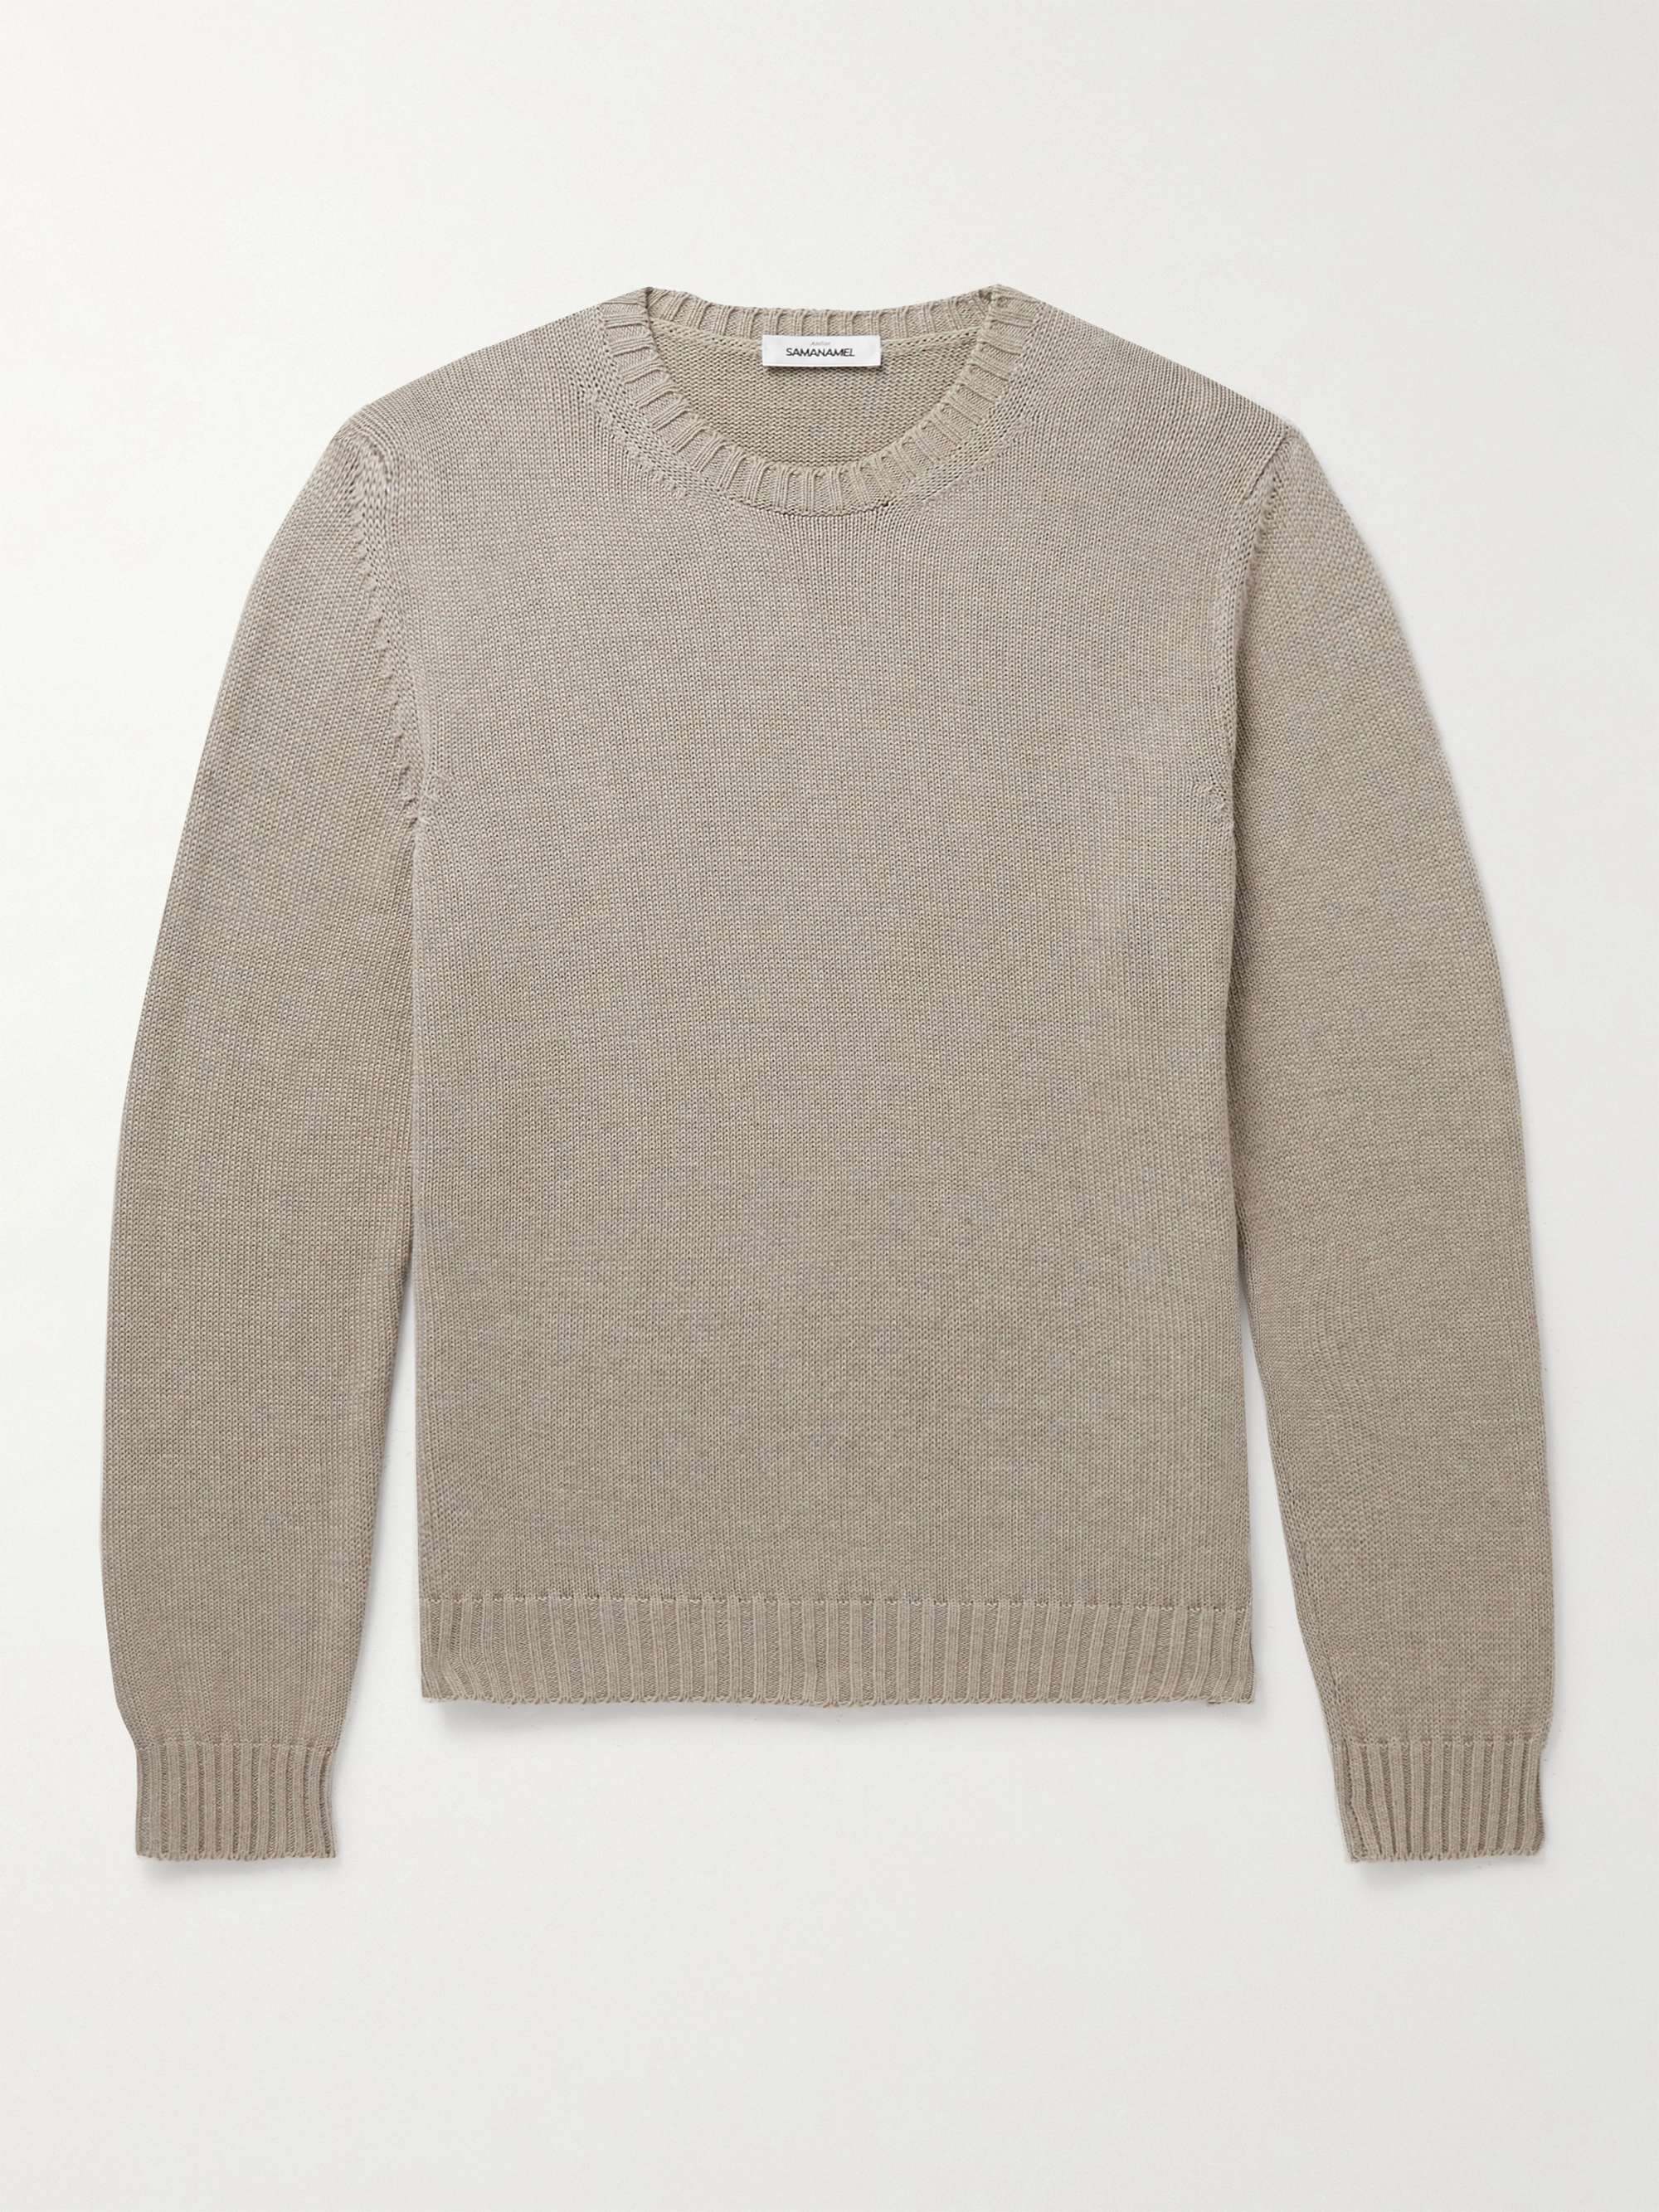 SAMAN AMEL Cotton Sweater